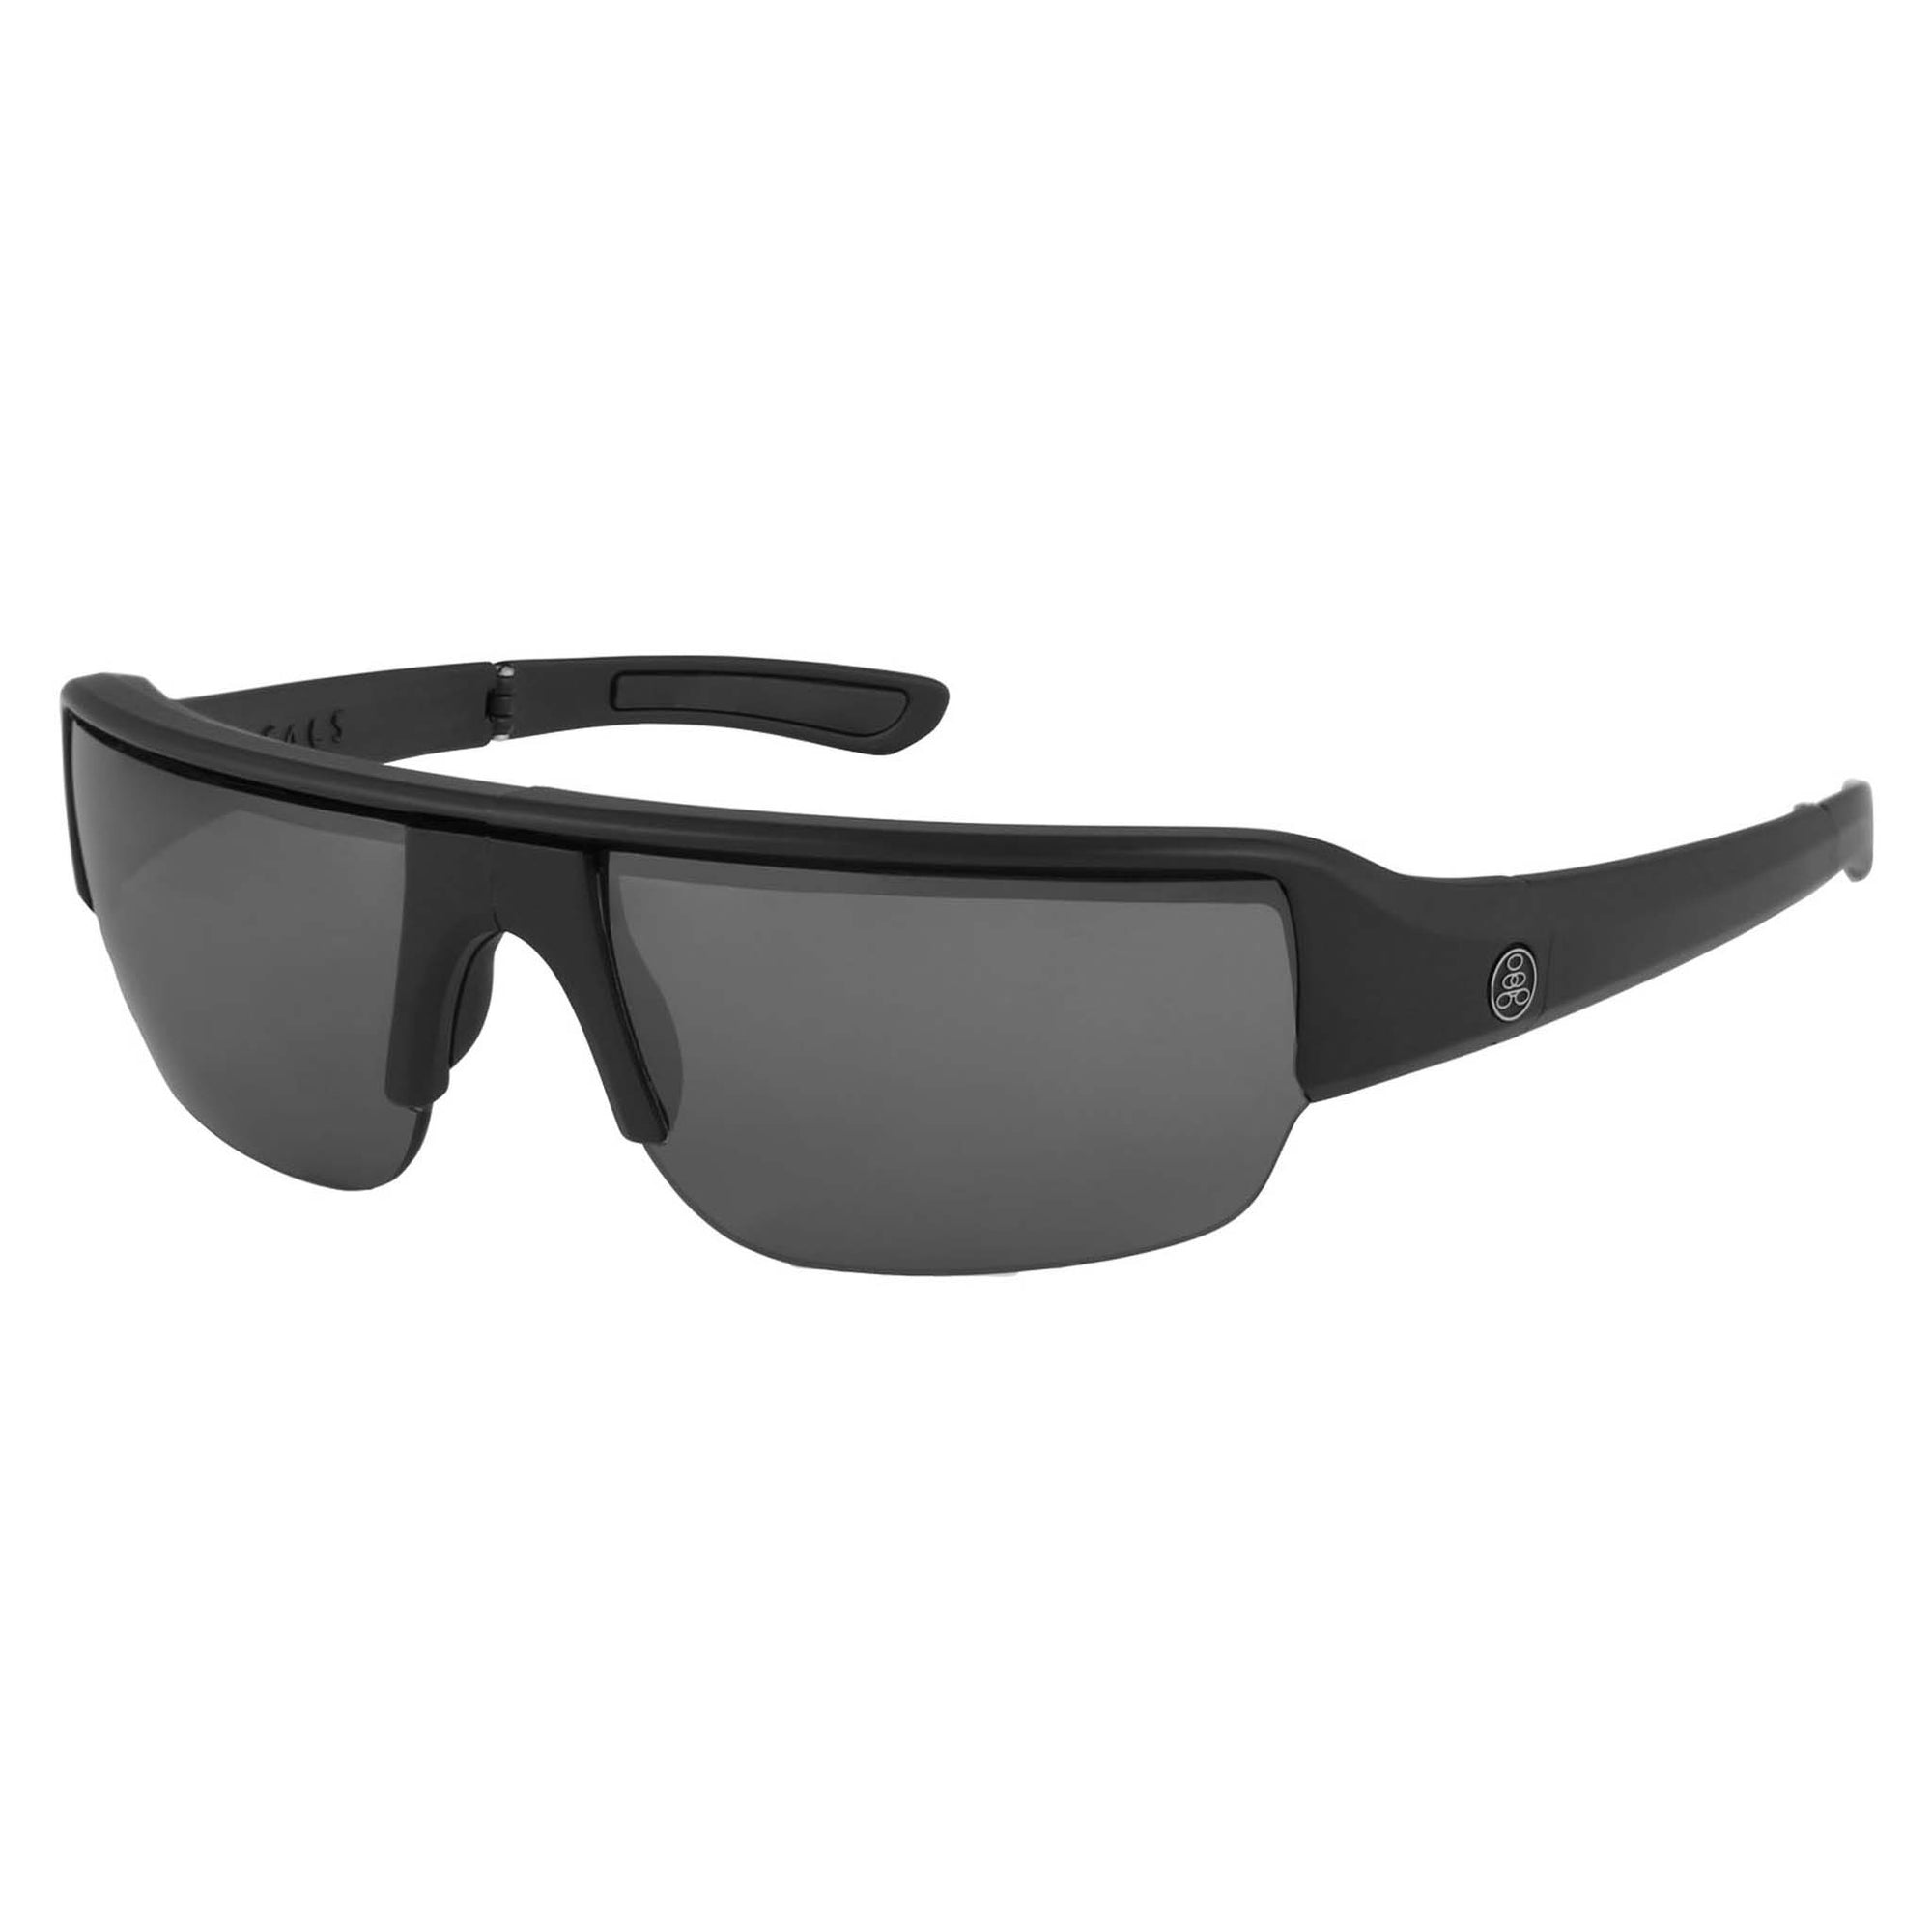 Popticals, Premium Compact Sunglasses, PopGun, 010010-BMGS, Standard Sunglasses, Matte Black Frame, Gray Lenses, Glam View